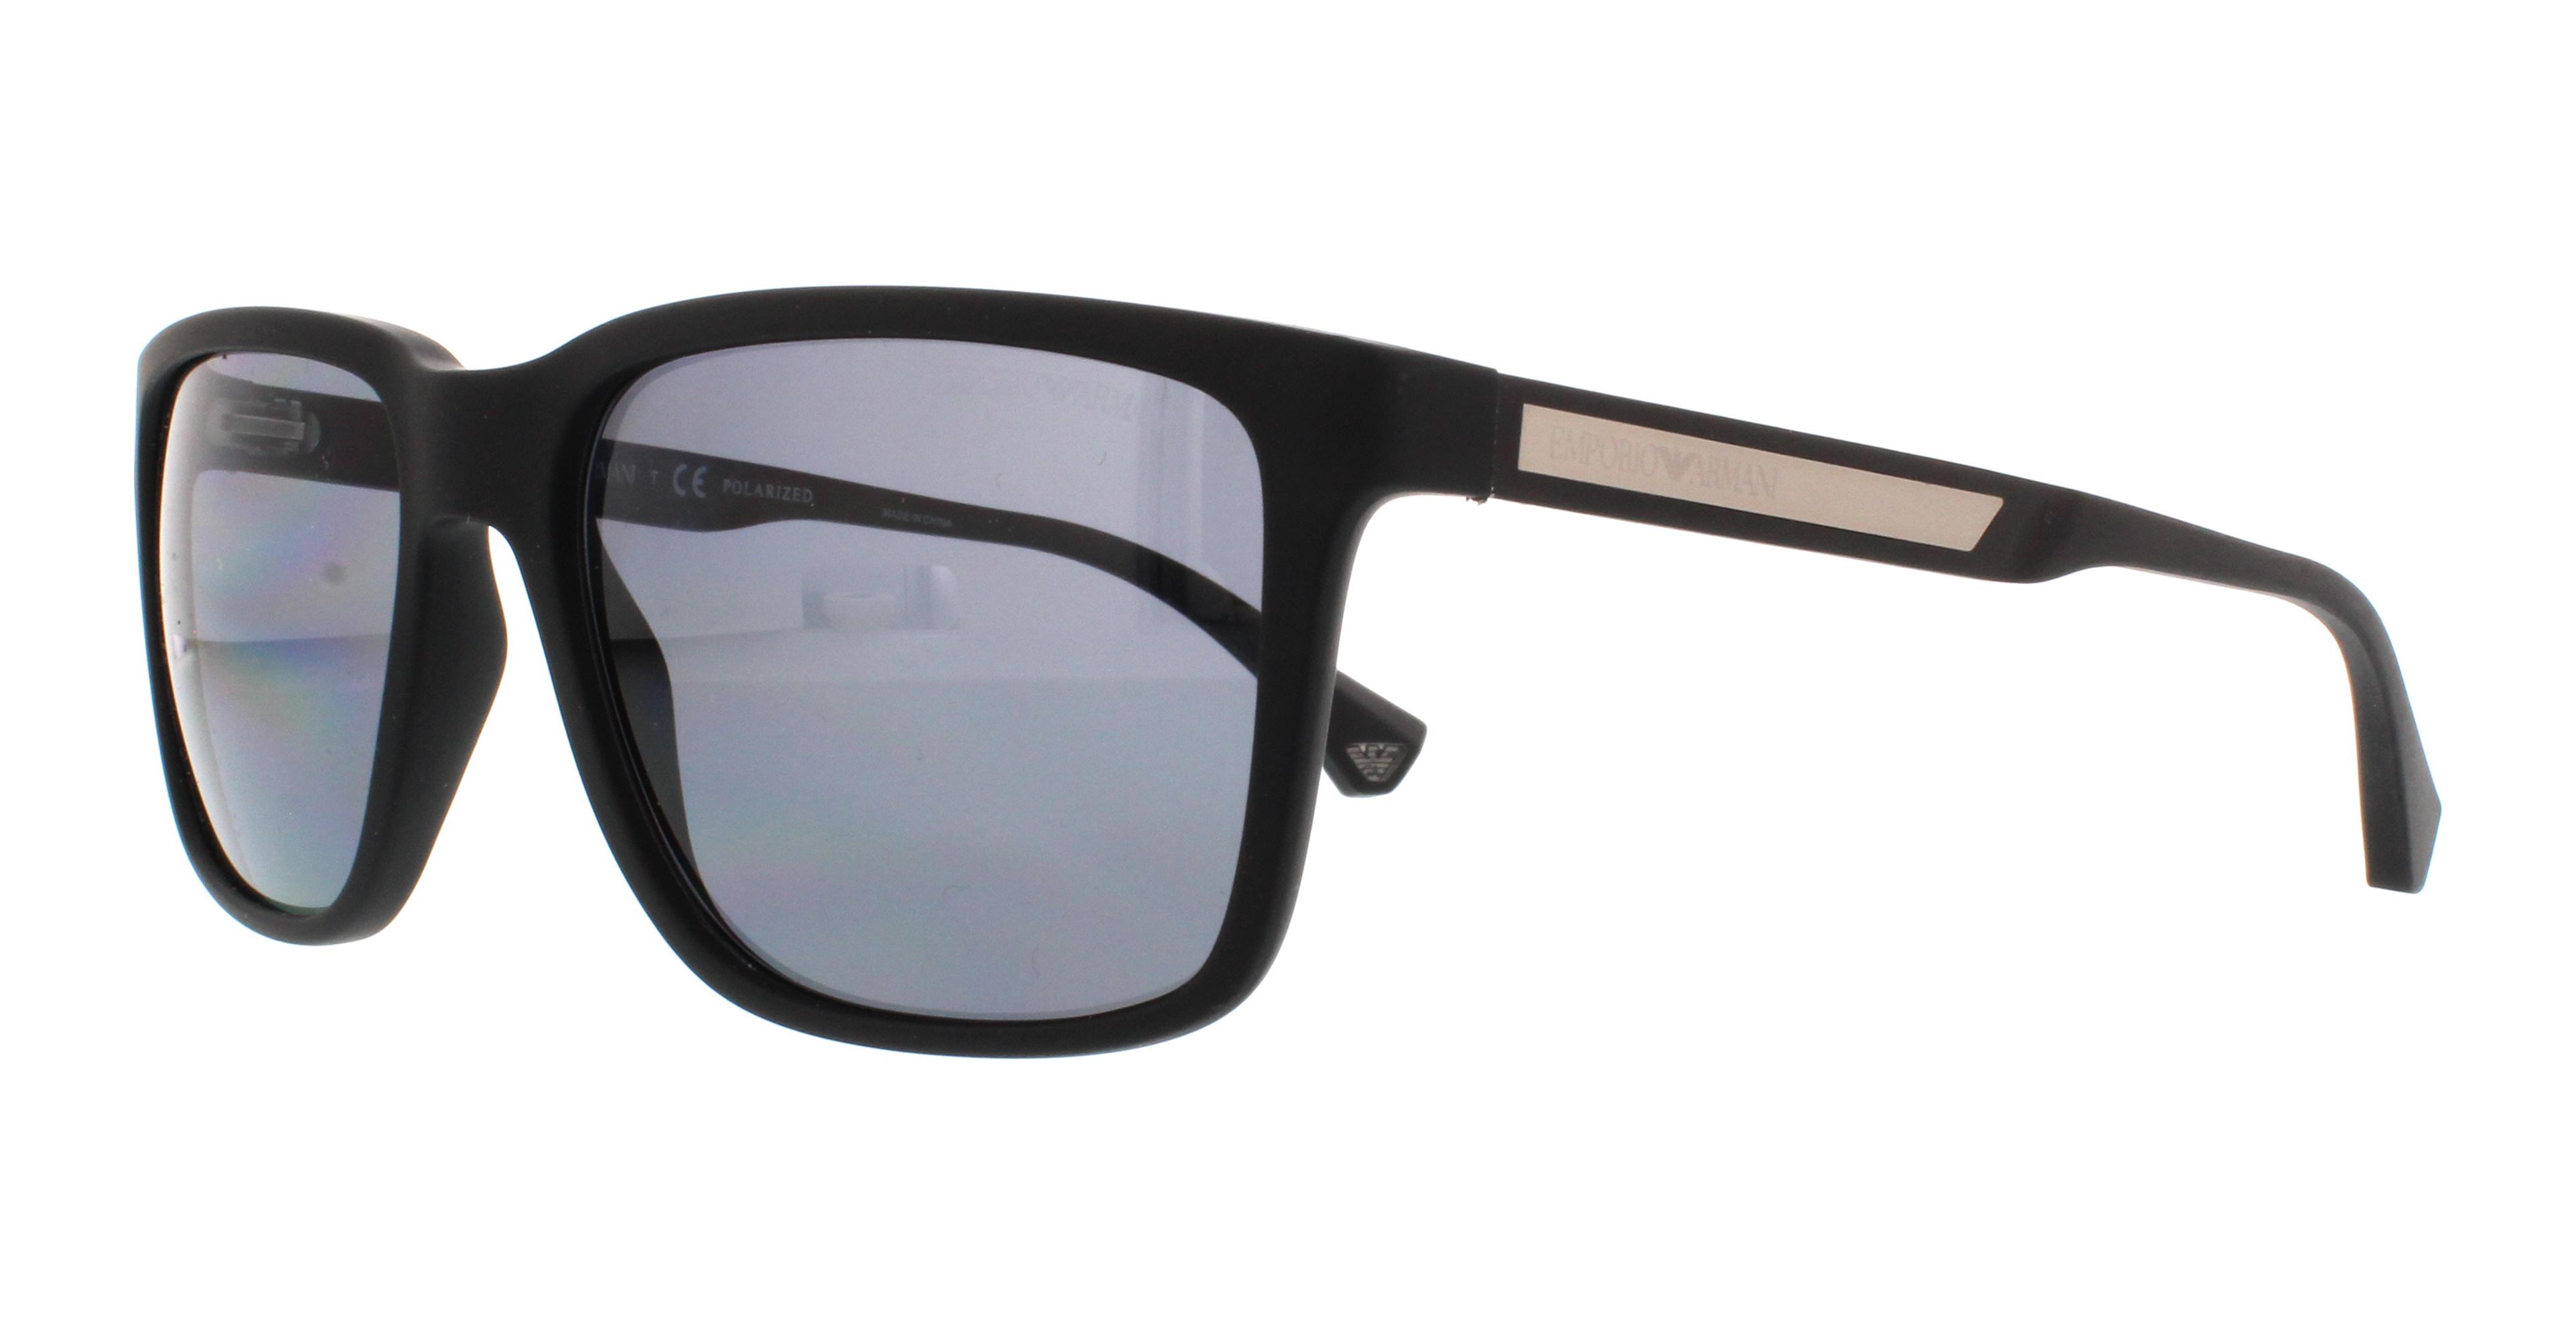 Designer Frames Outlet. Emporio Armani Sunglasses EA4047